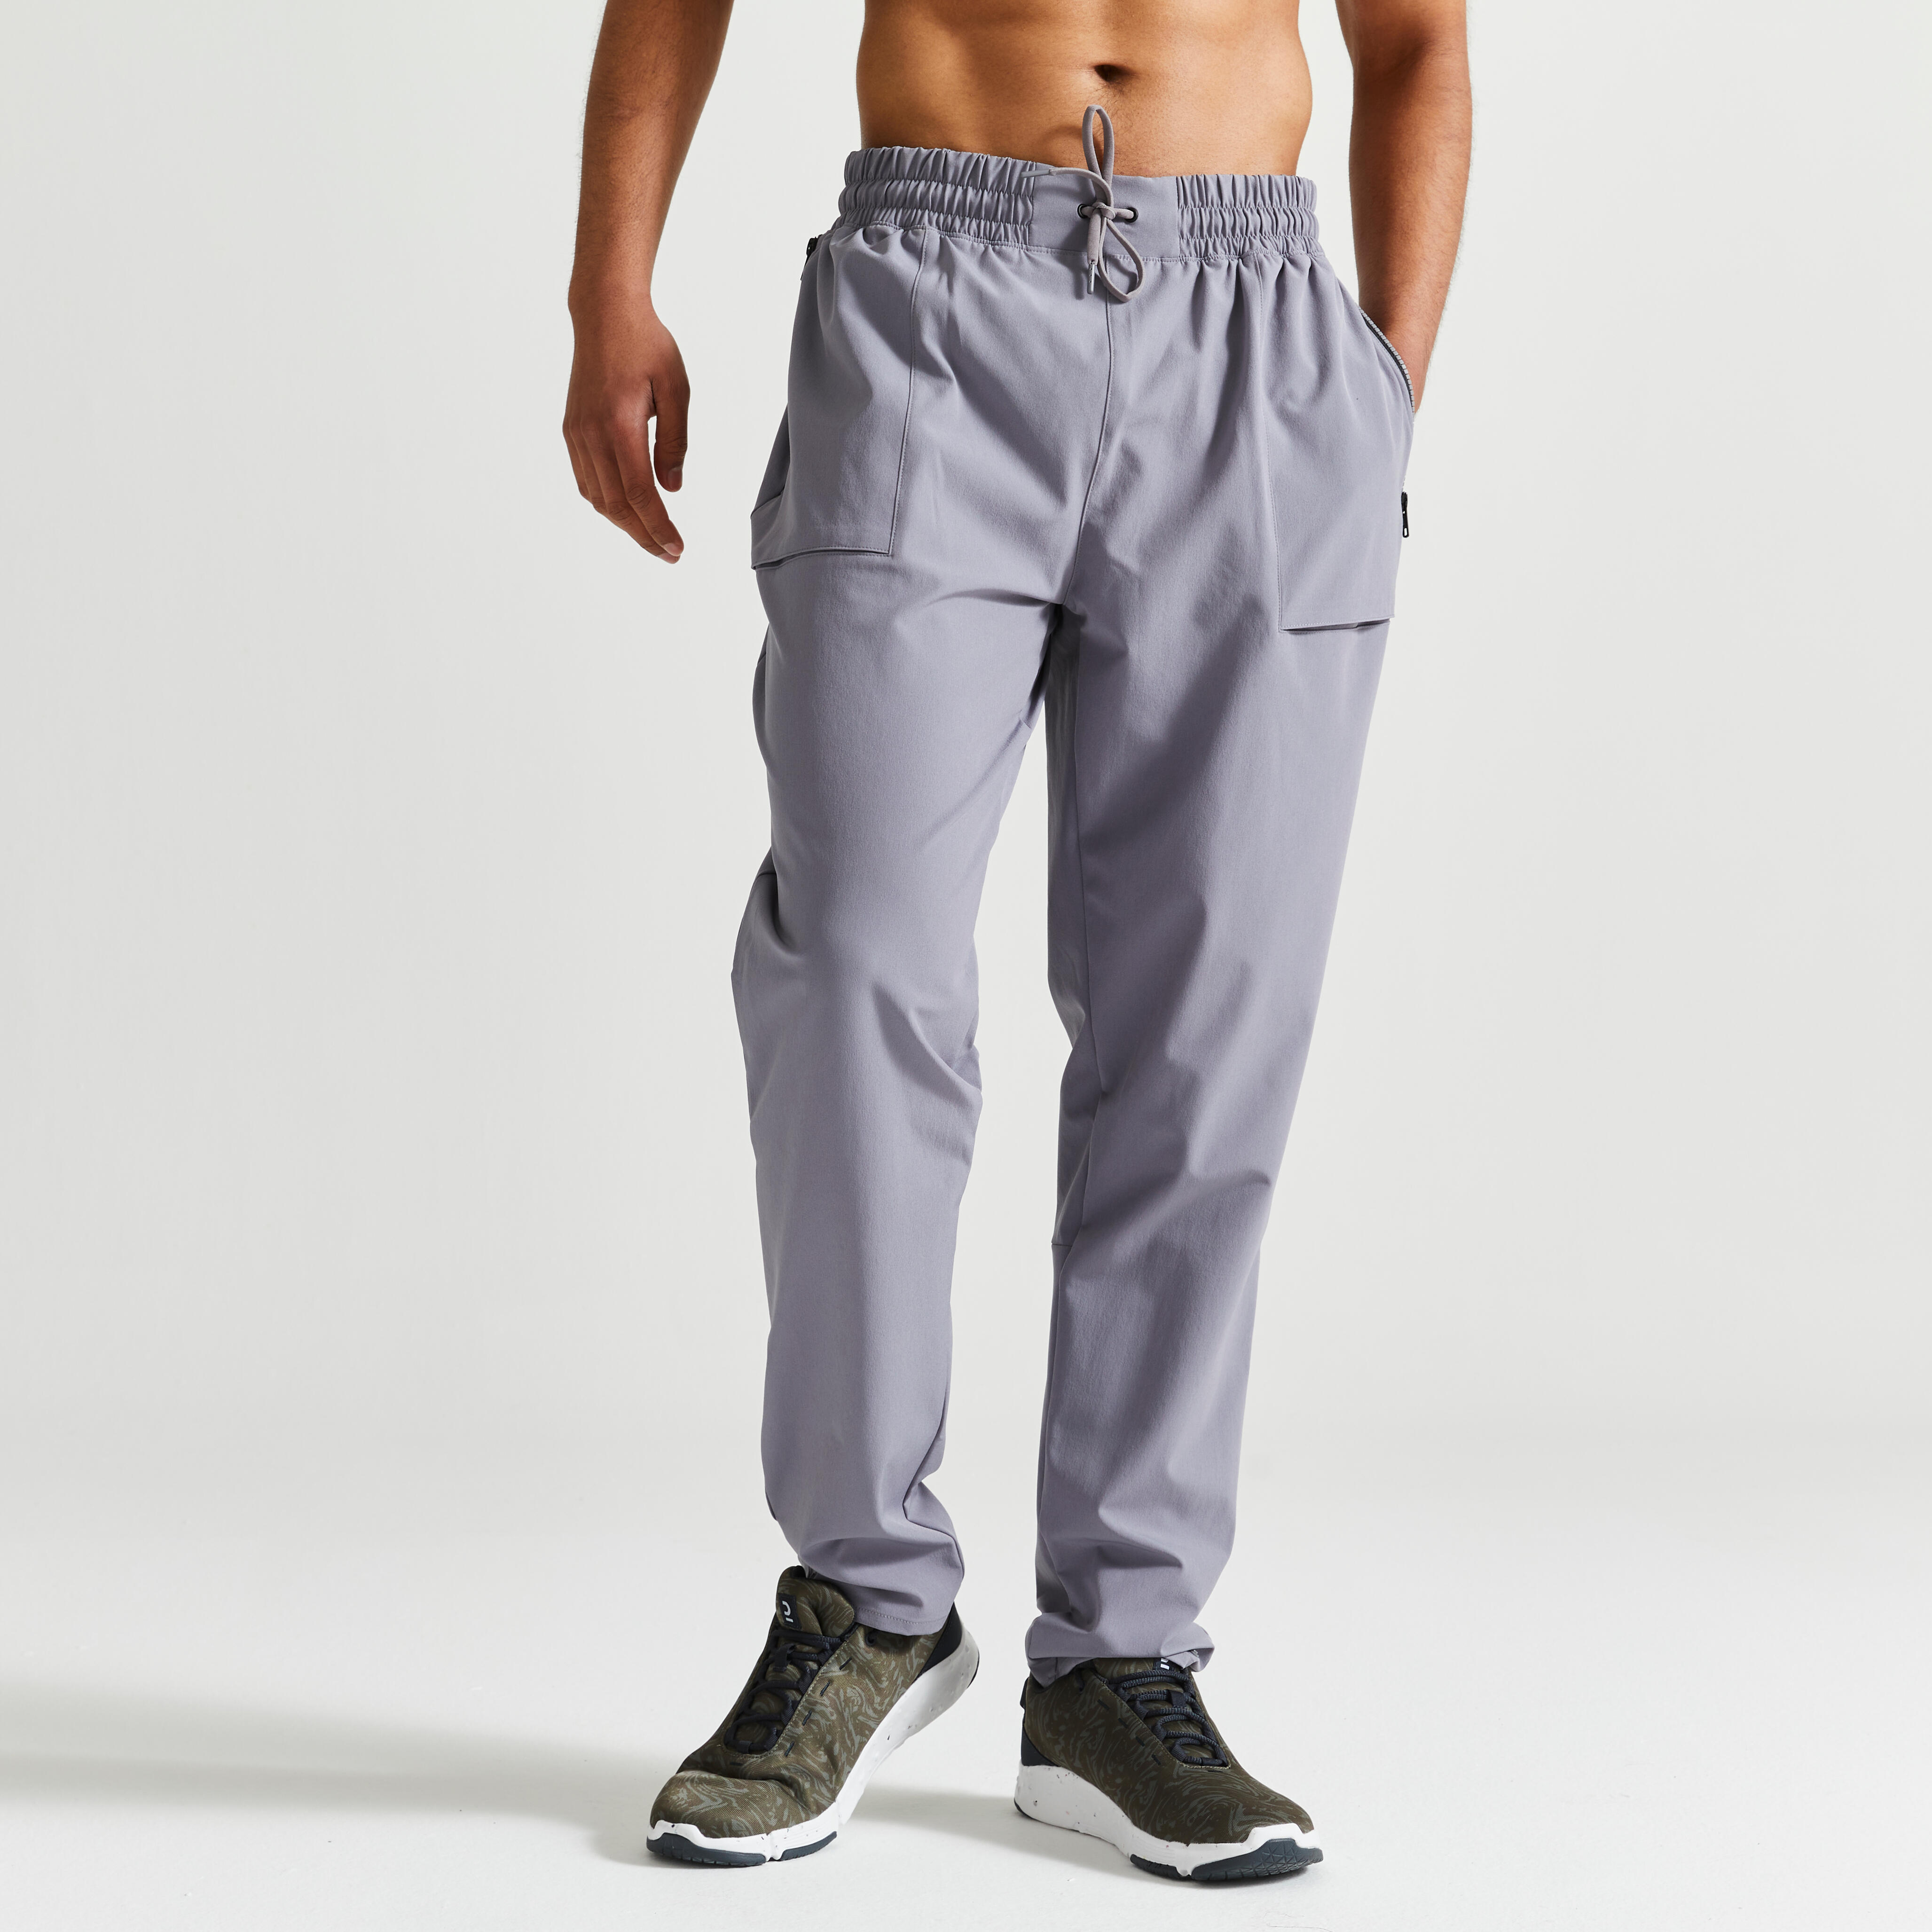 Buy Men's Running Breathable Trousers Dry - Black Online | Decathlon